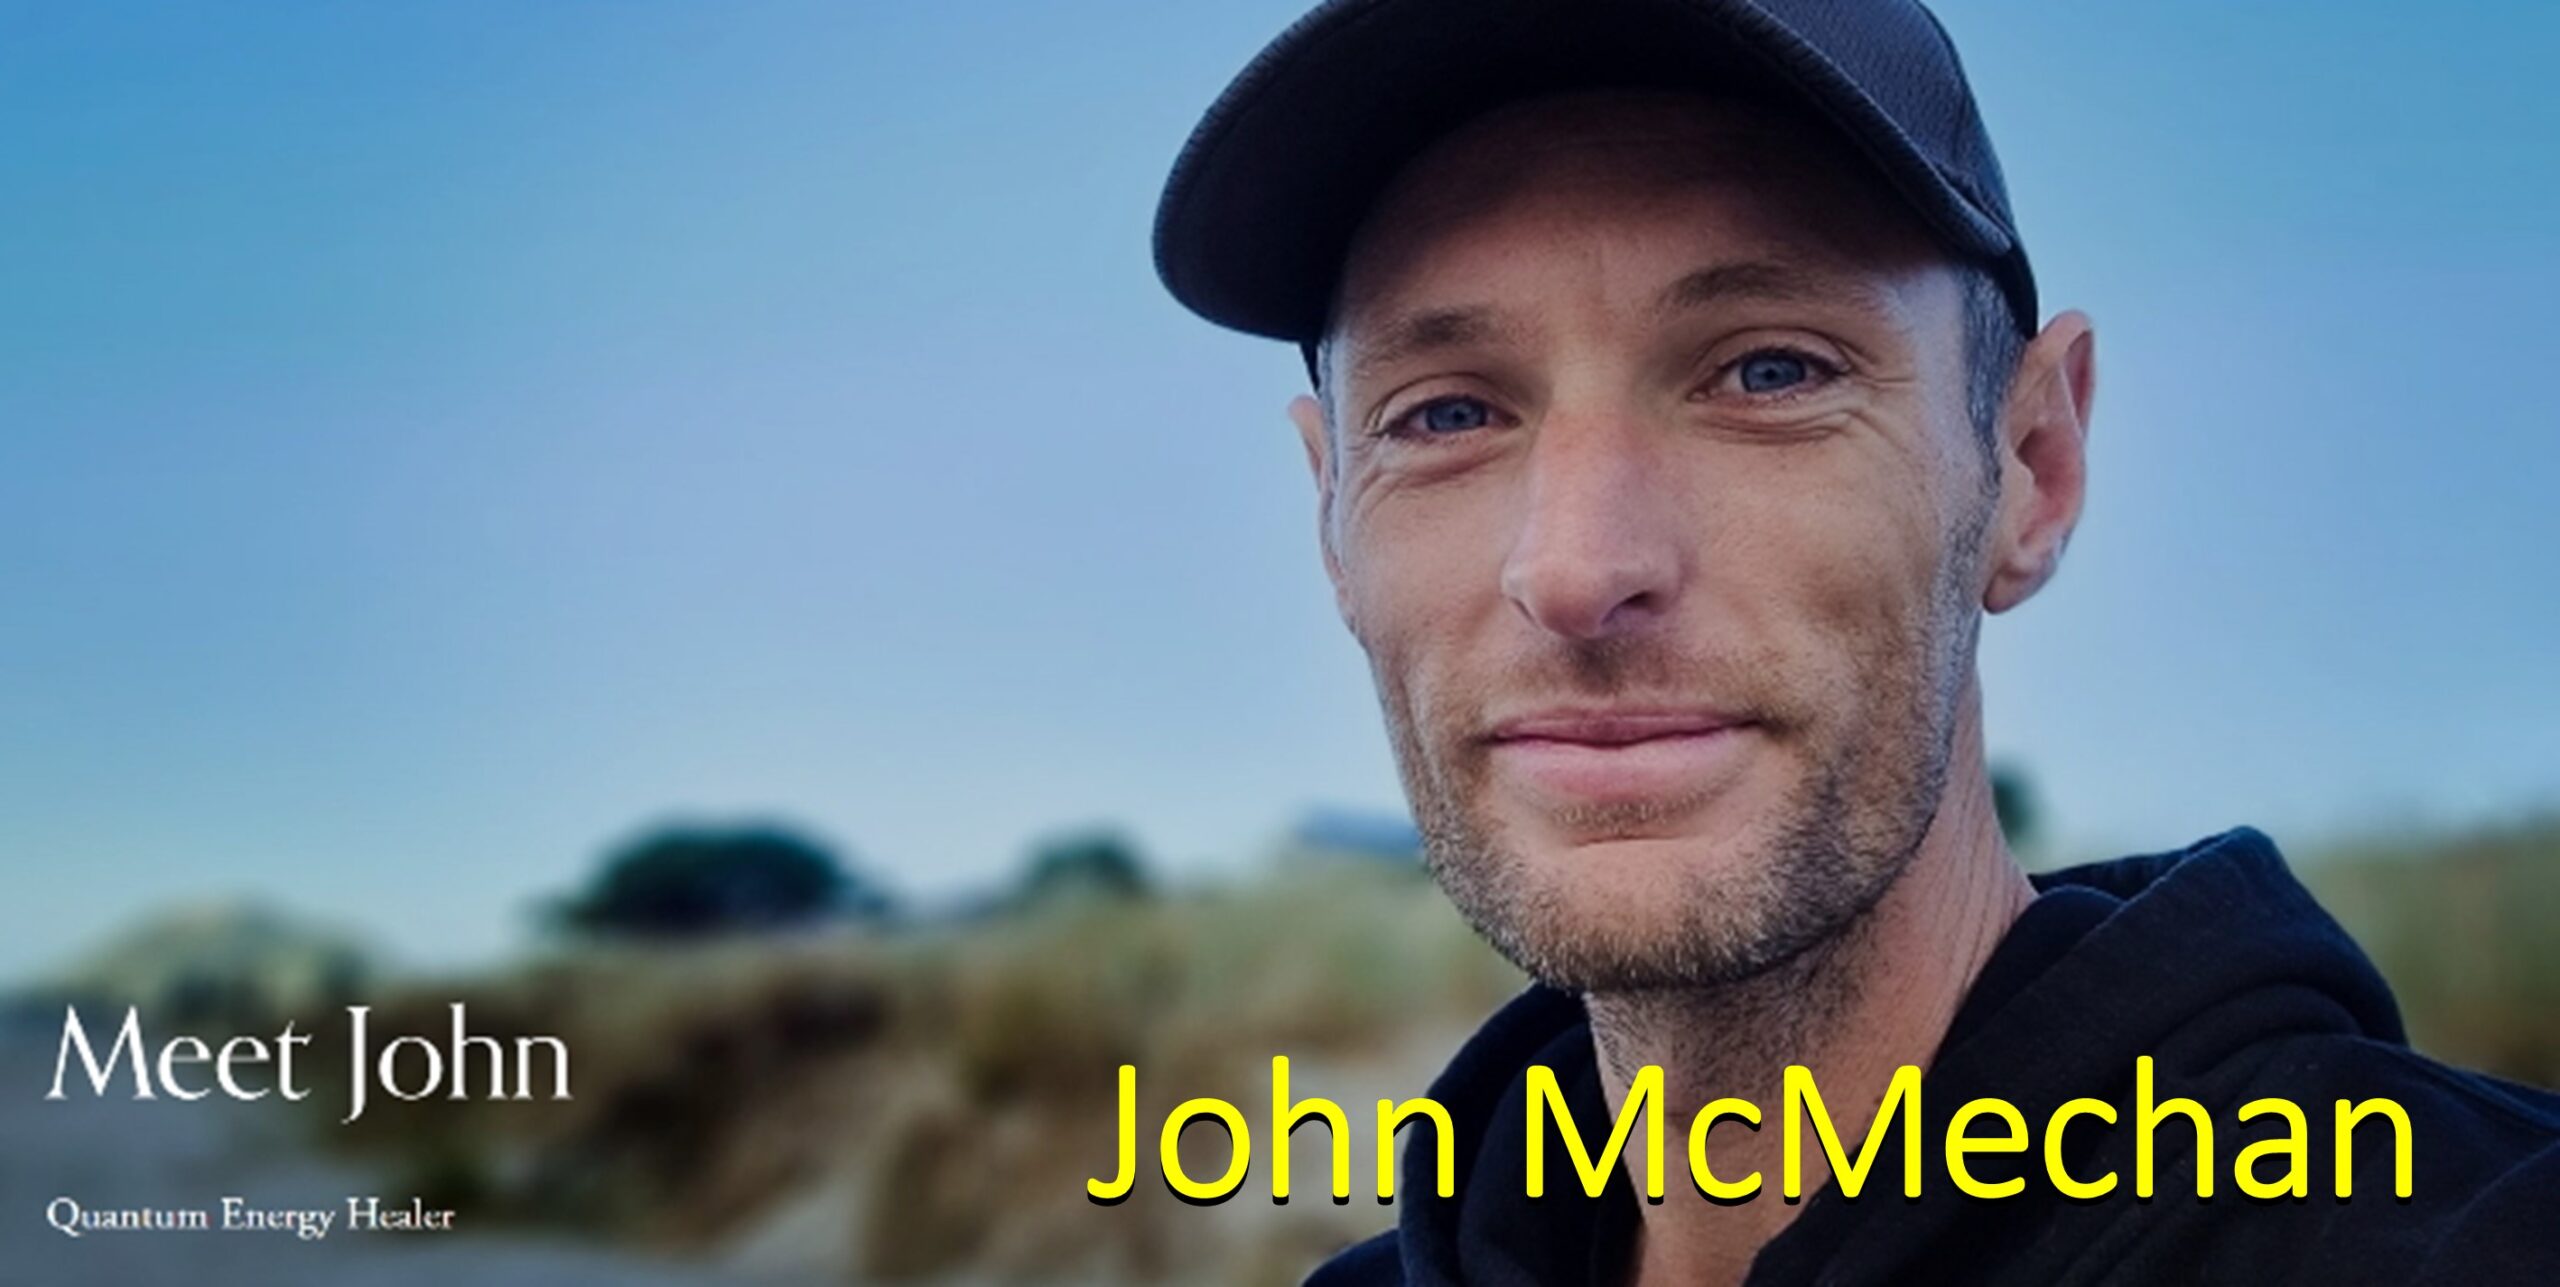 John McMechan